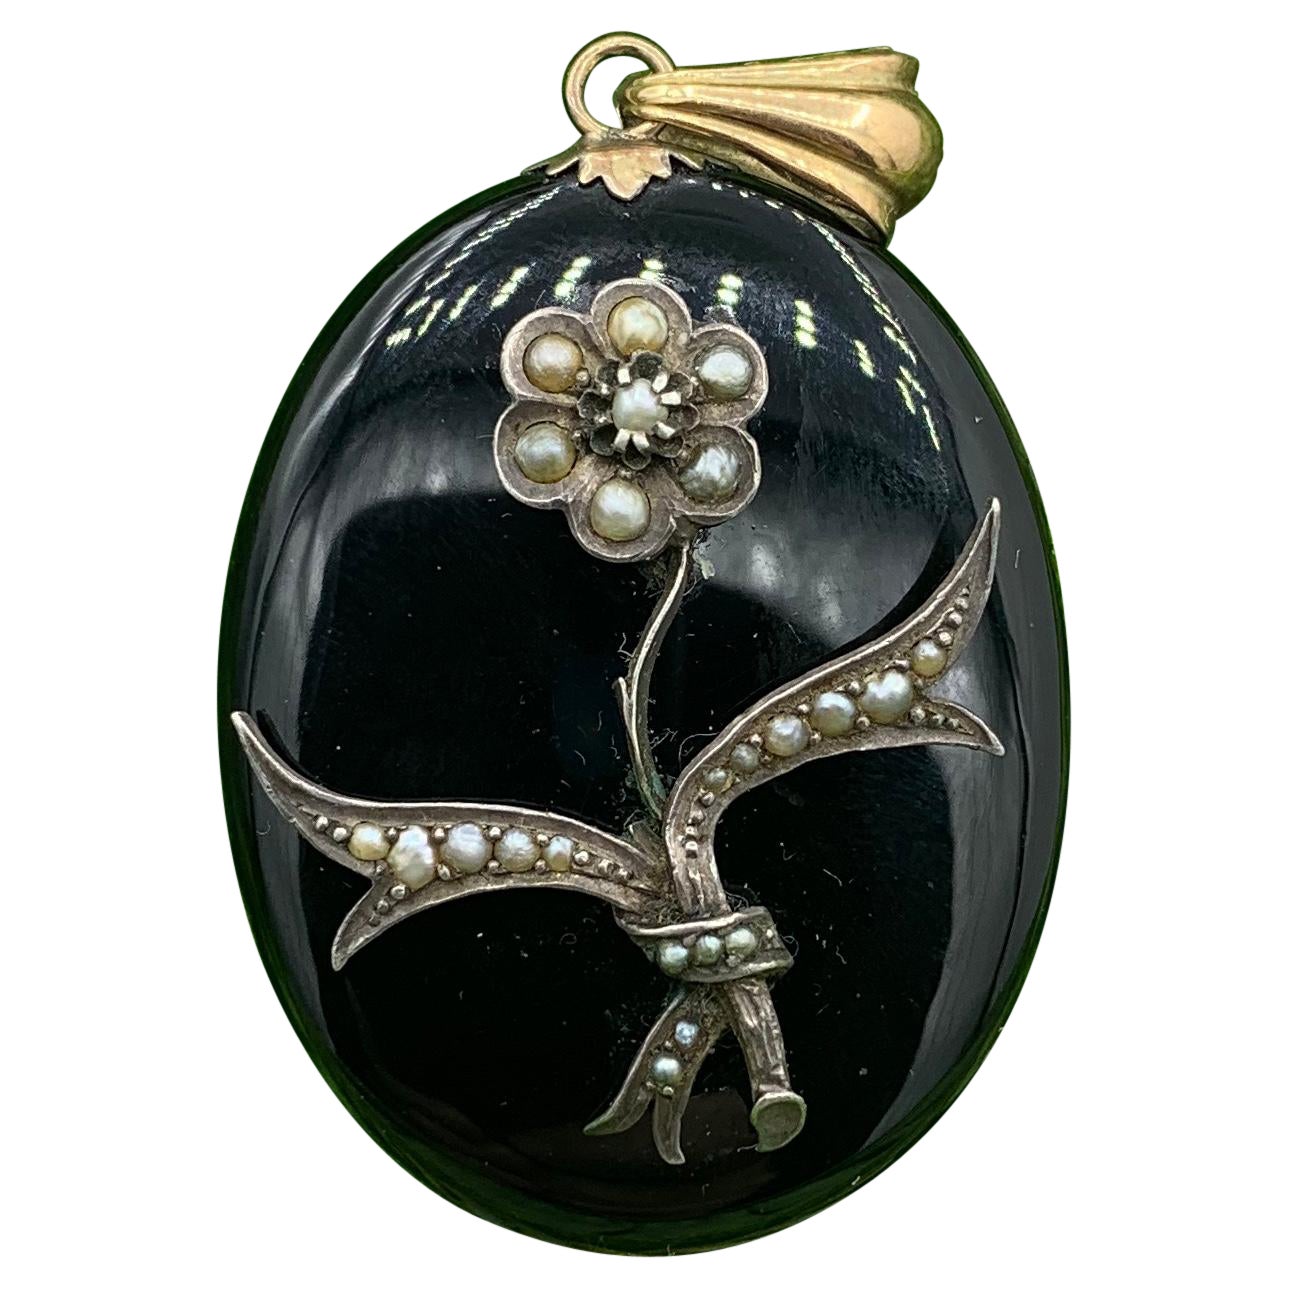 Victorian Black Onyx Locket Necklace Flower Motif Gold Pearl, Circa 1860